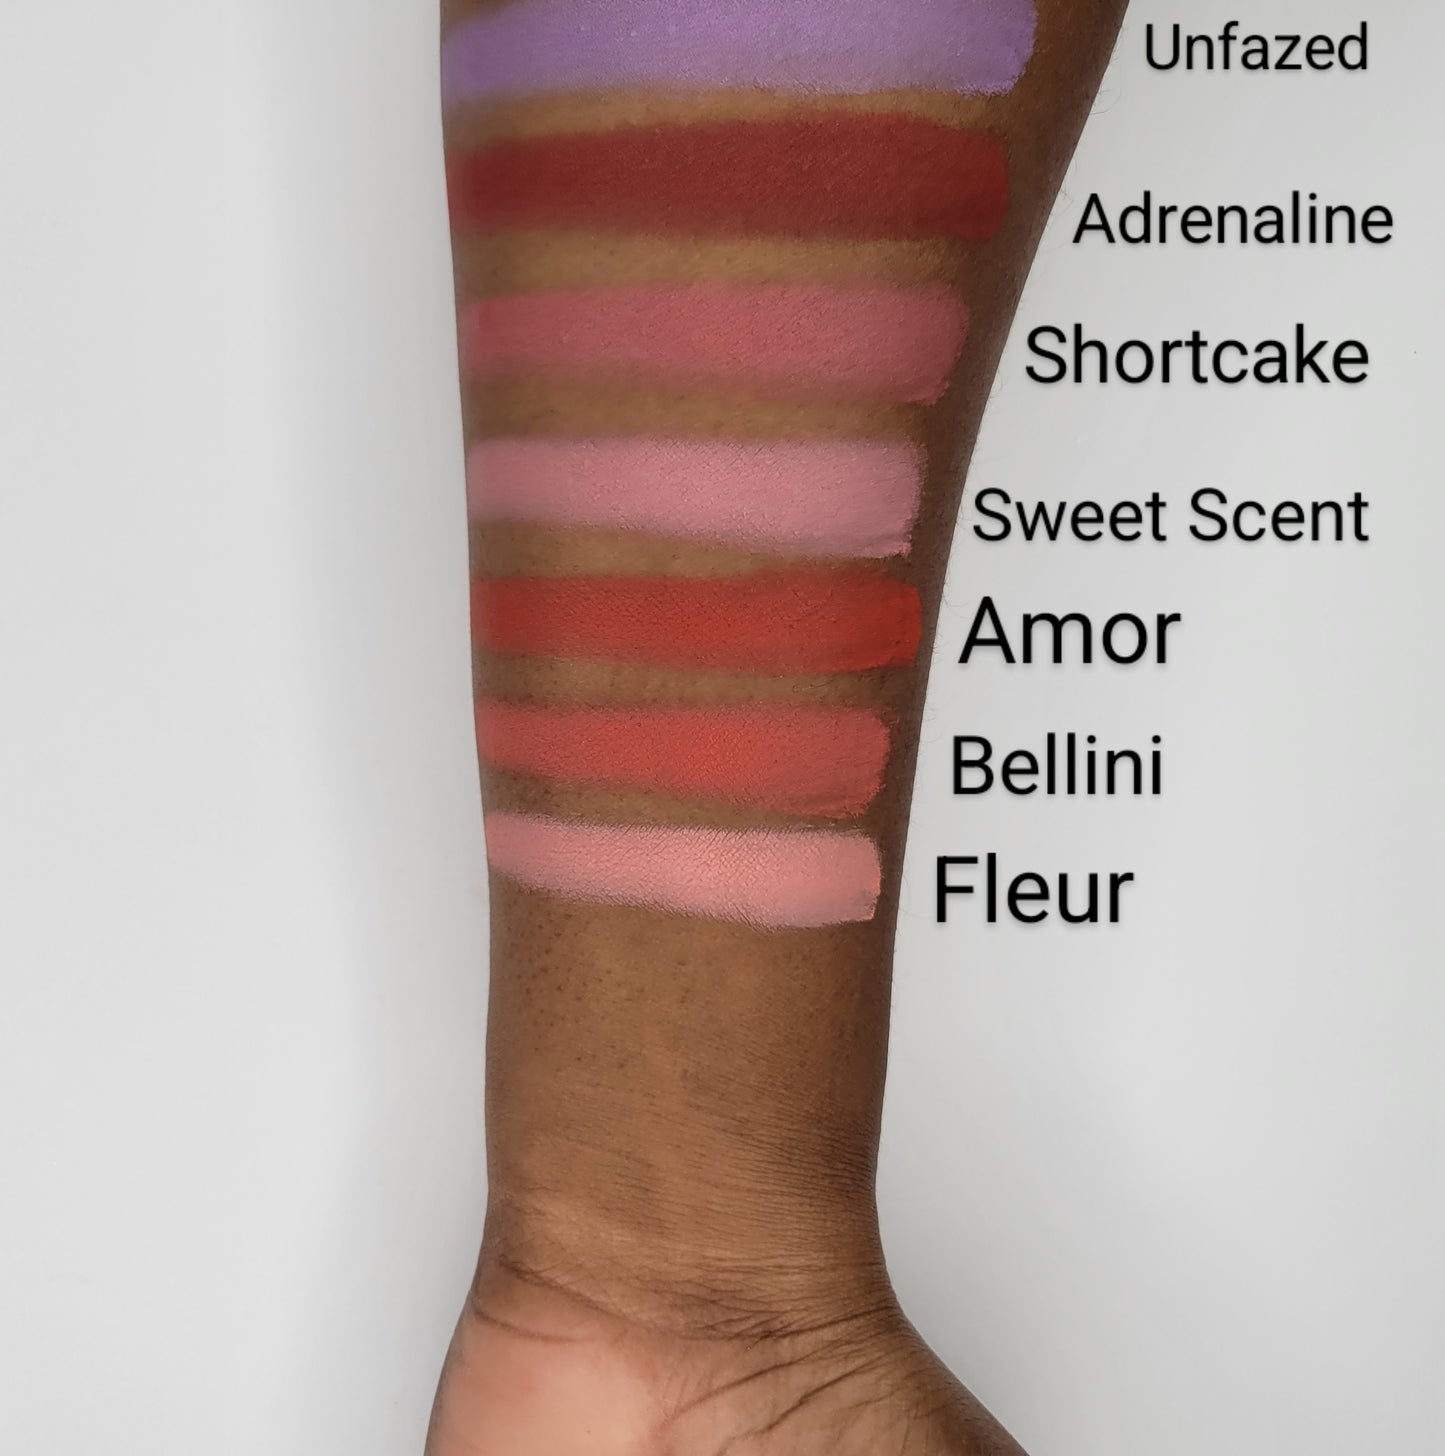 Fleur - Eyeshadow Matte Light Salmon Pink